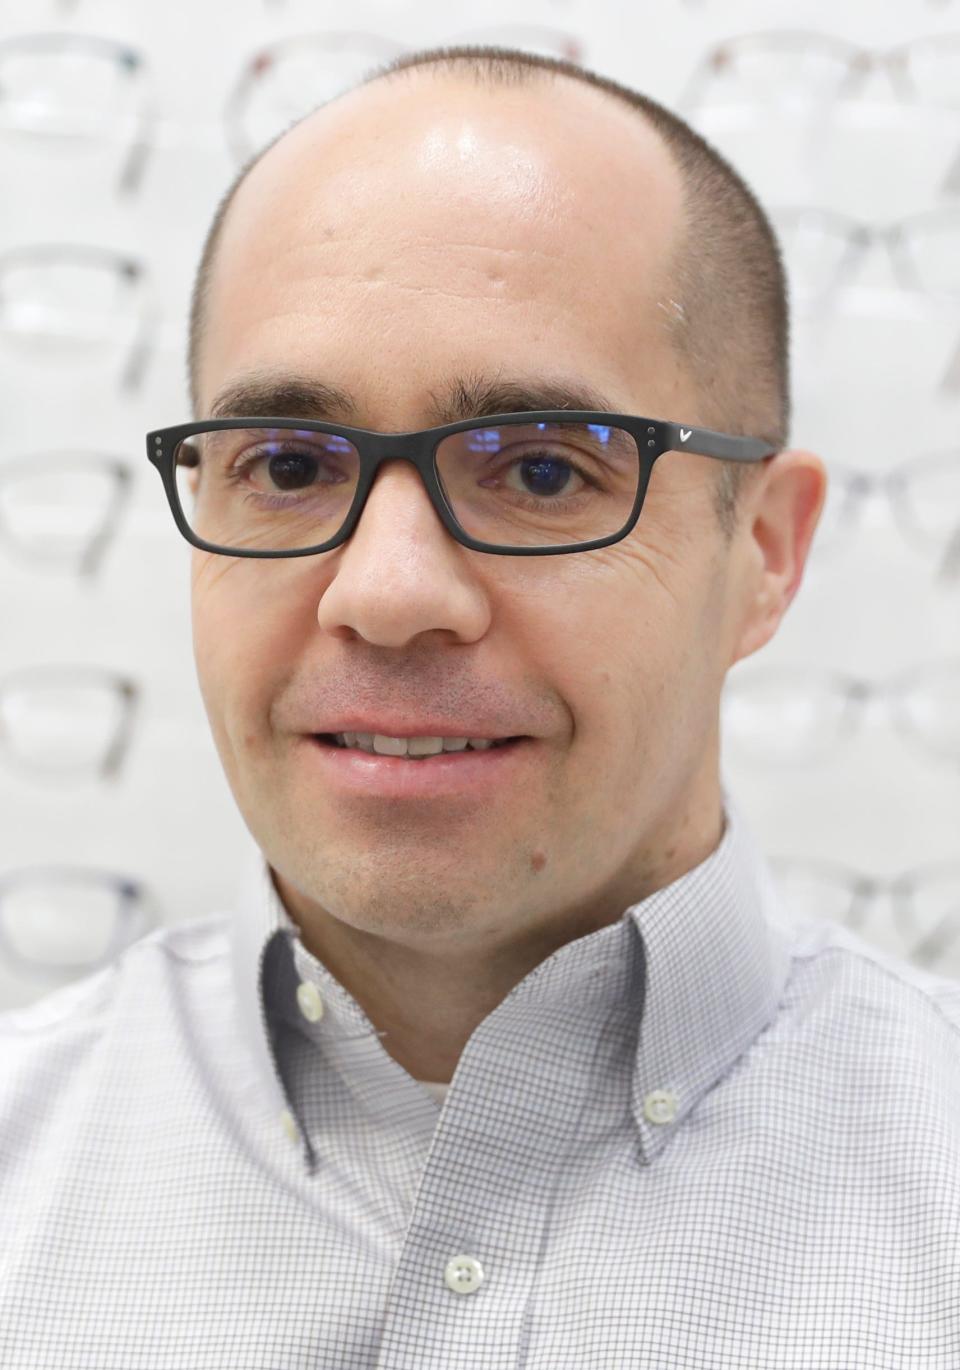 Shopko Optical CEO Russ Steinhorst